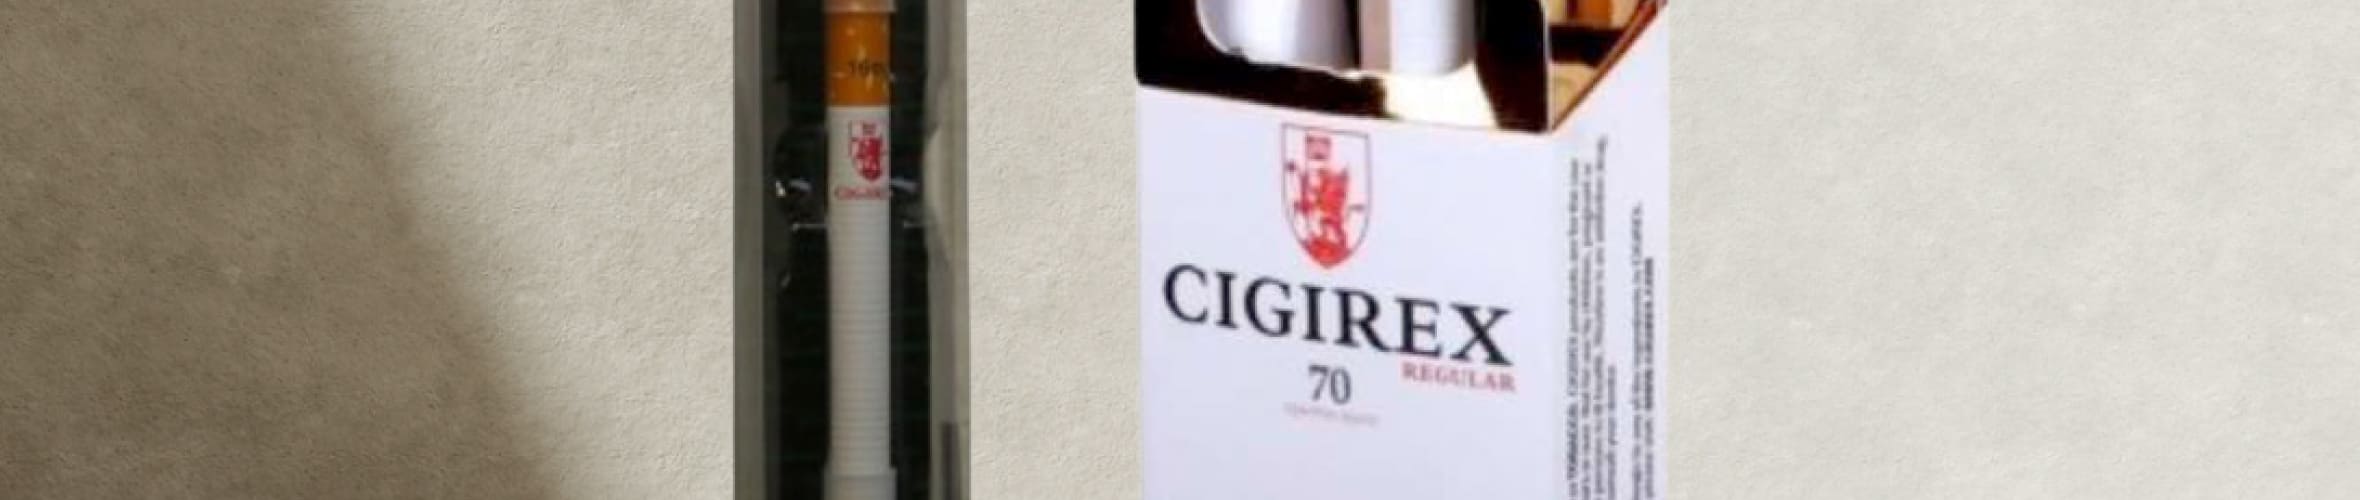 cigirex e-cigs品牌评审